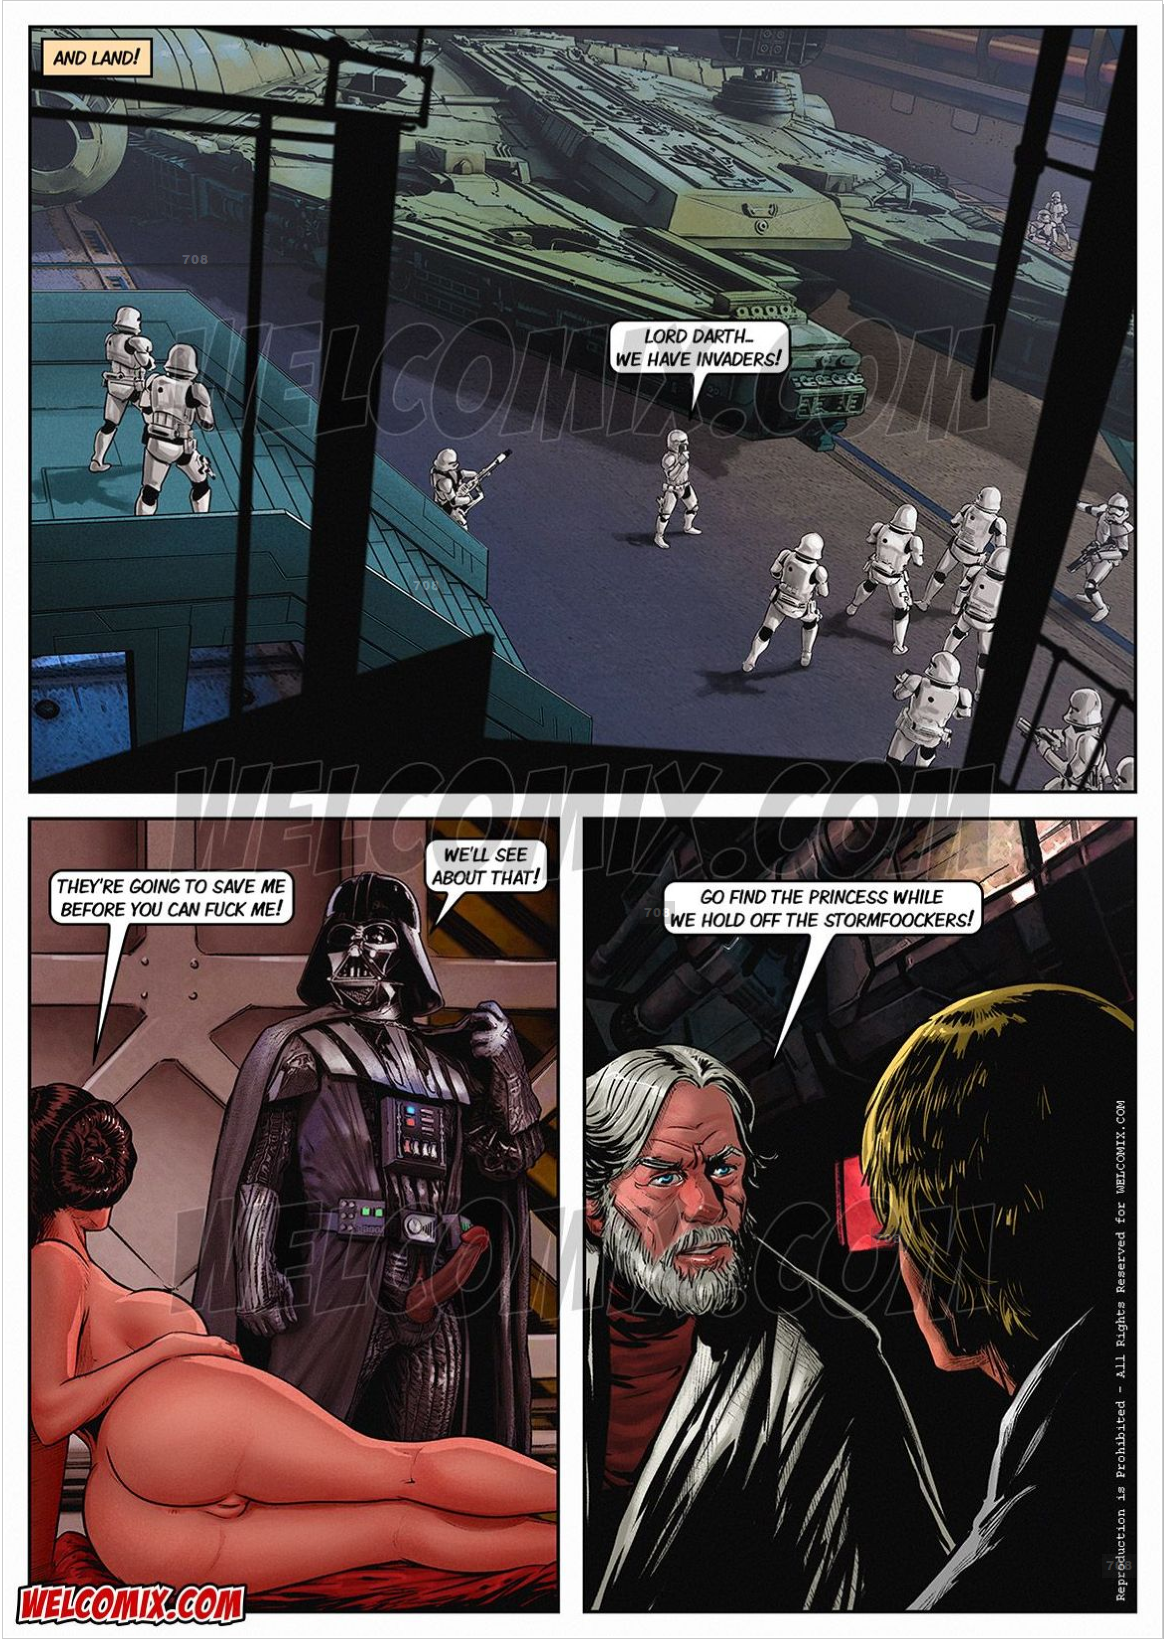 BlockBuster-Comics-03-Star-Wars-English-page14--Gotofap.tk--81050024.png